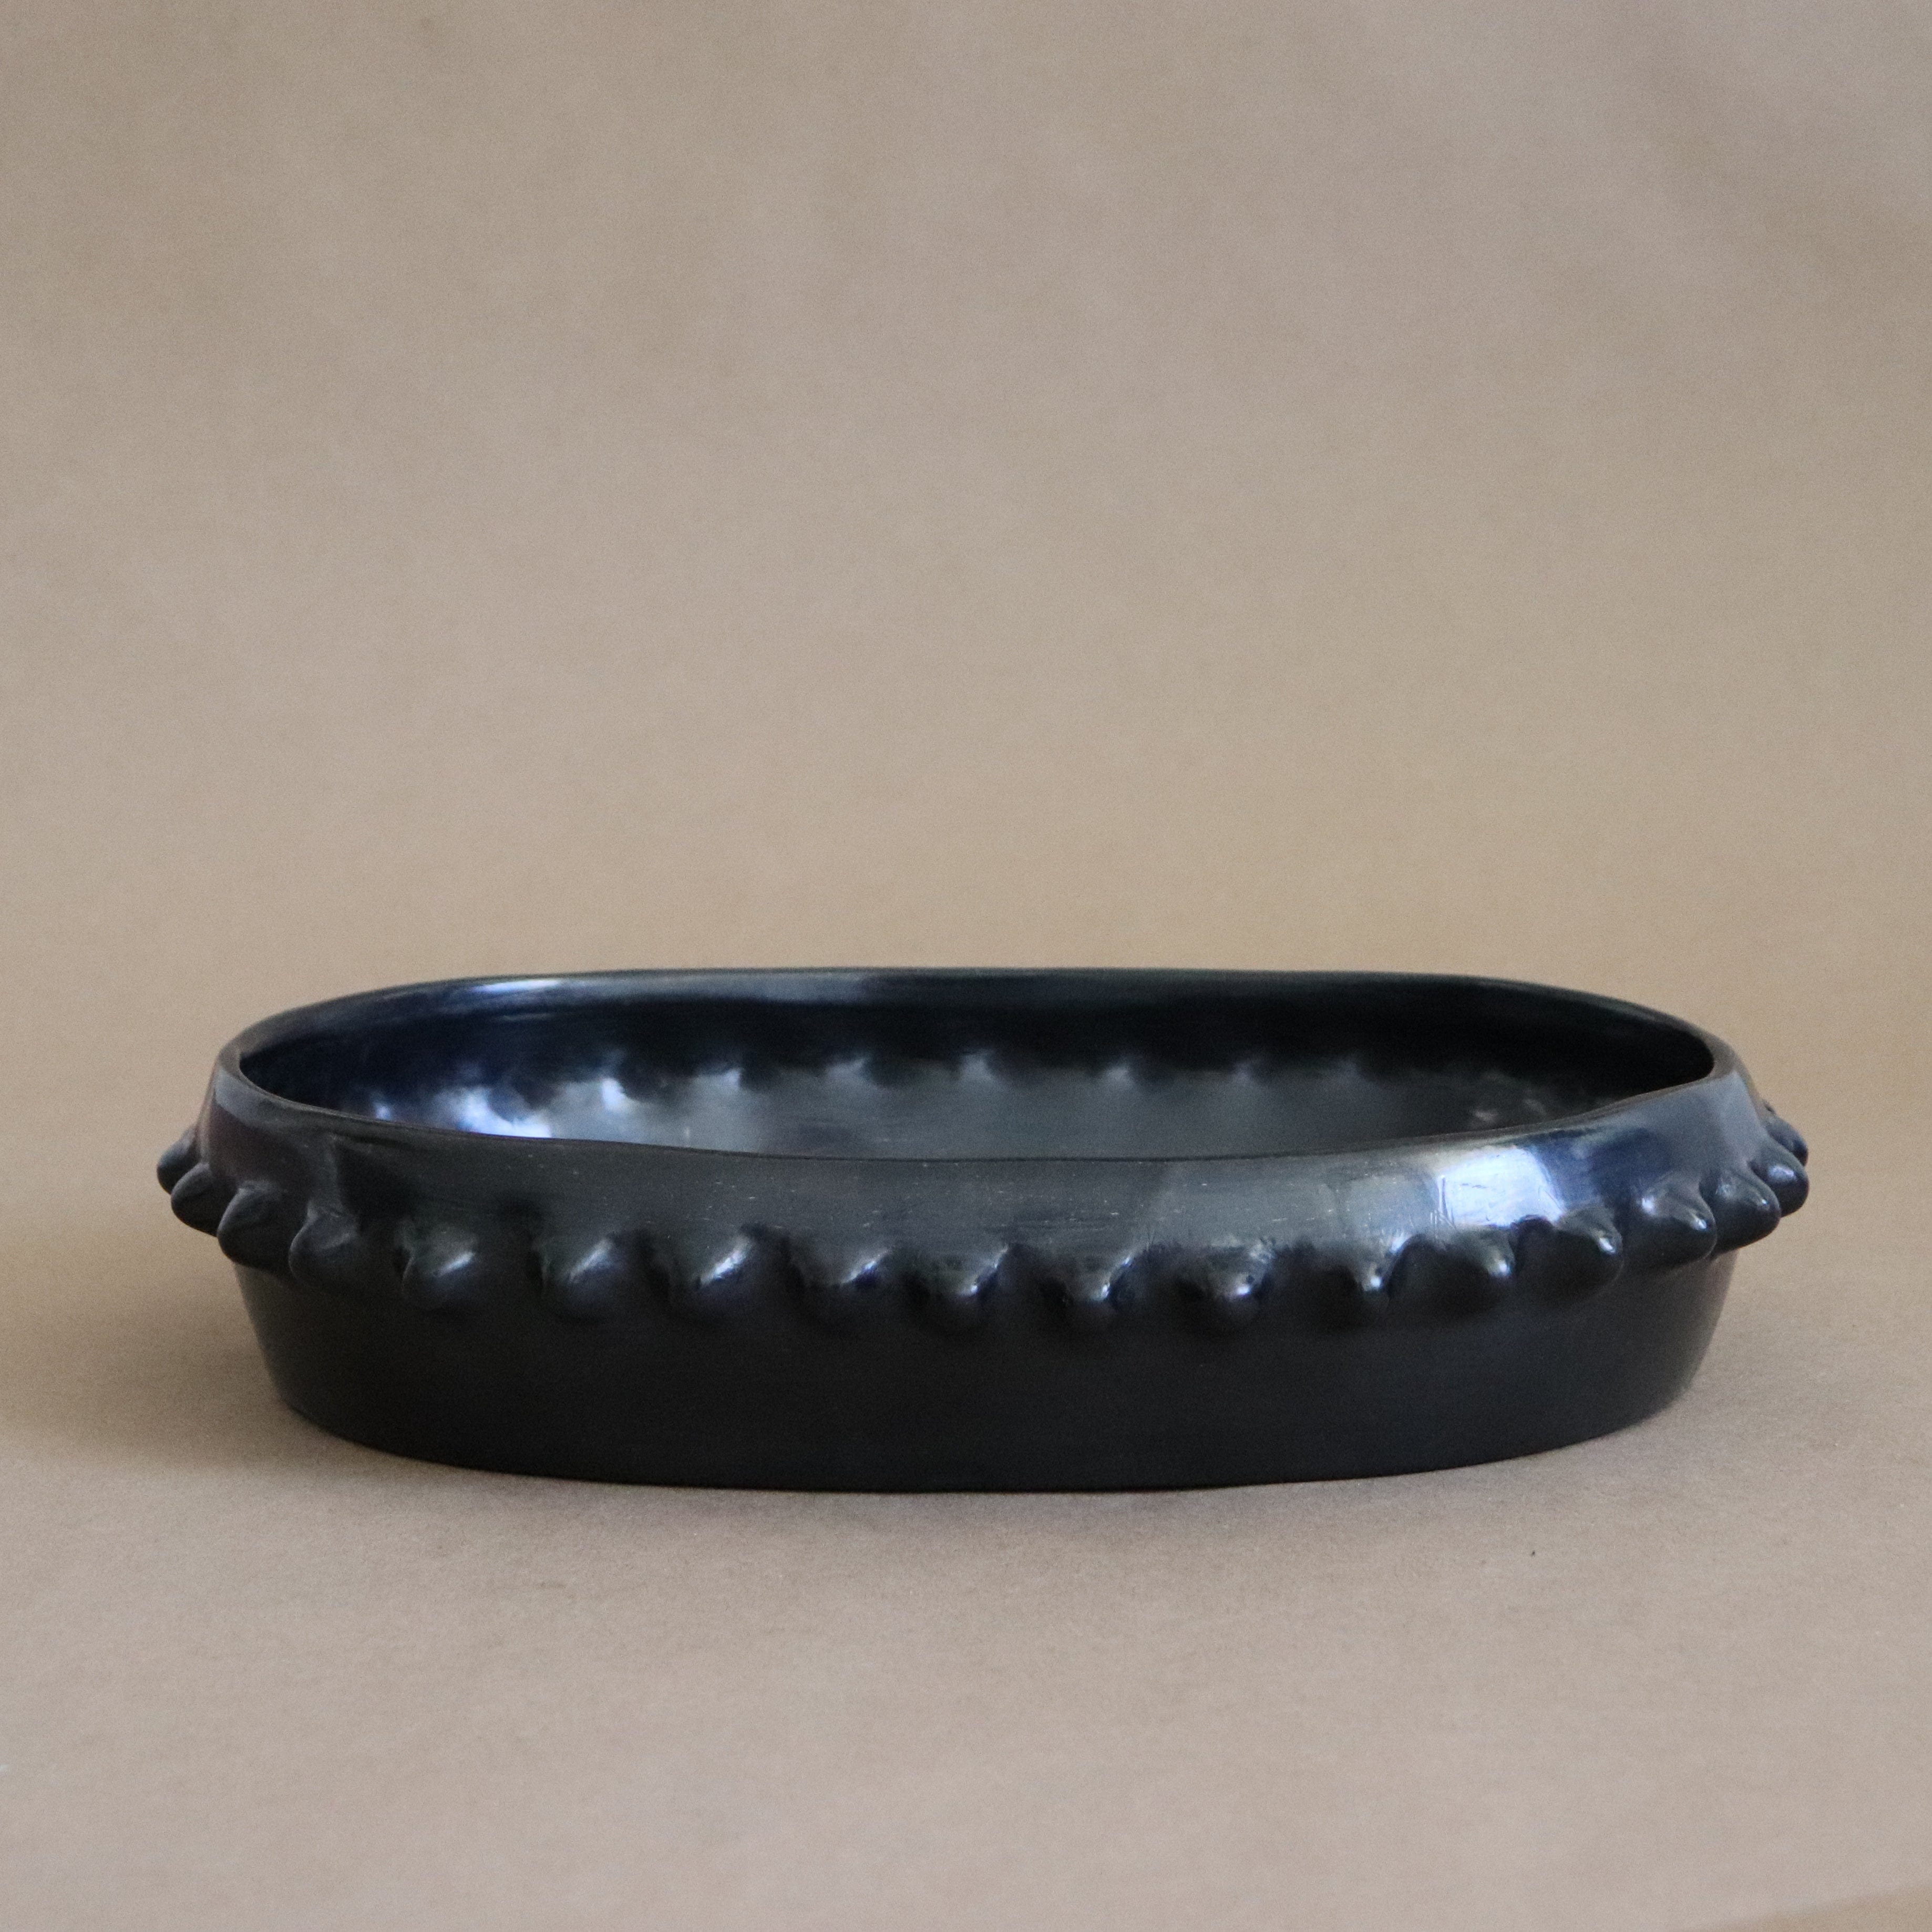 ONORA Decor Prehispanic Silver / Black Clay Platter